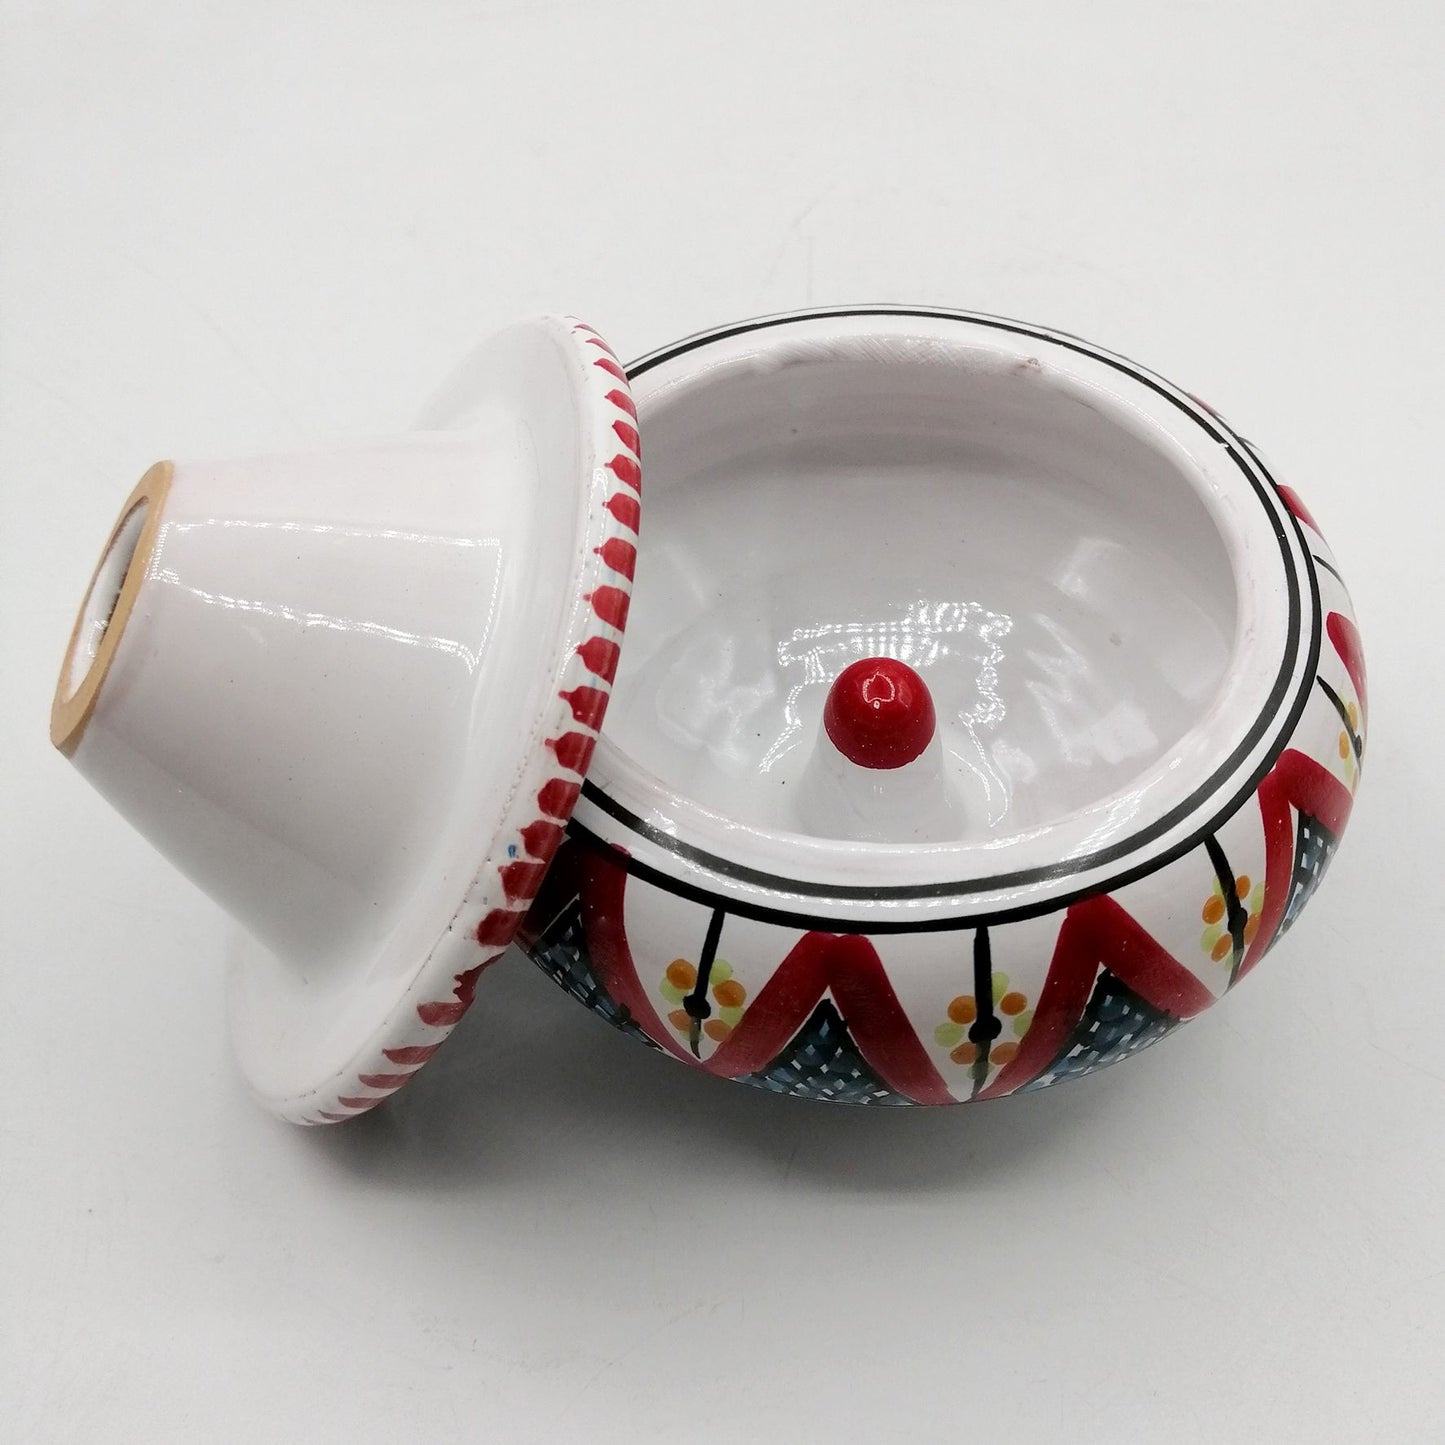 Etnico Arredo Posacenere Ceramica Antiodore Tunisina Marocchina 1211201107